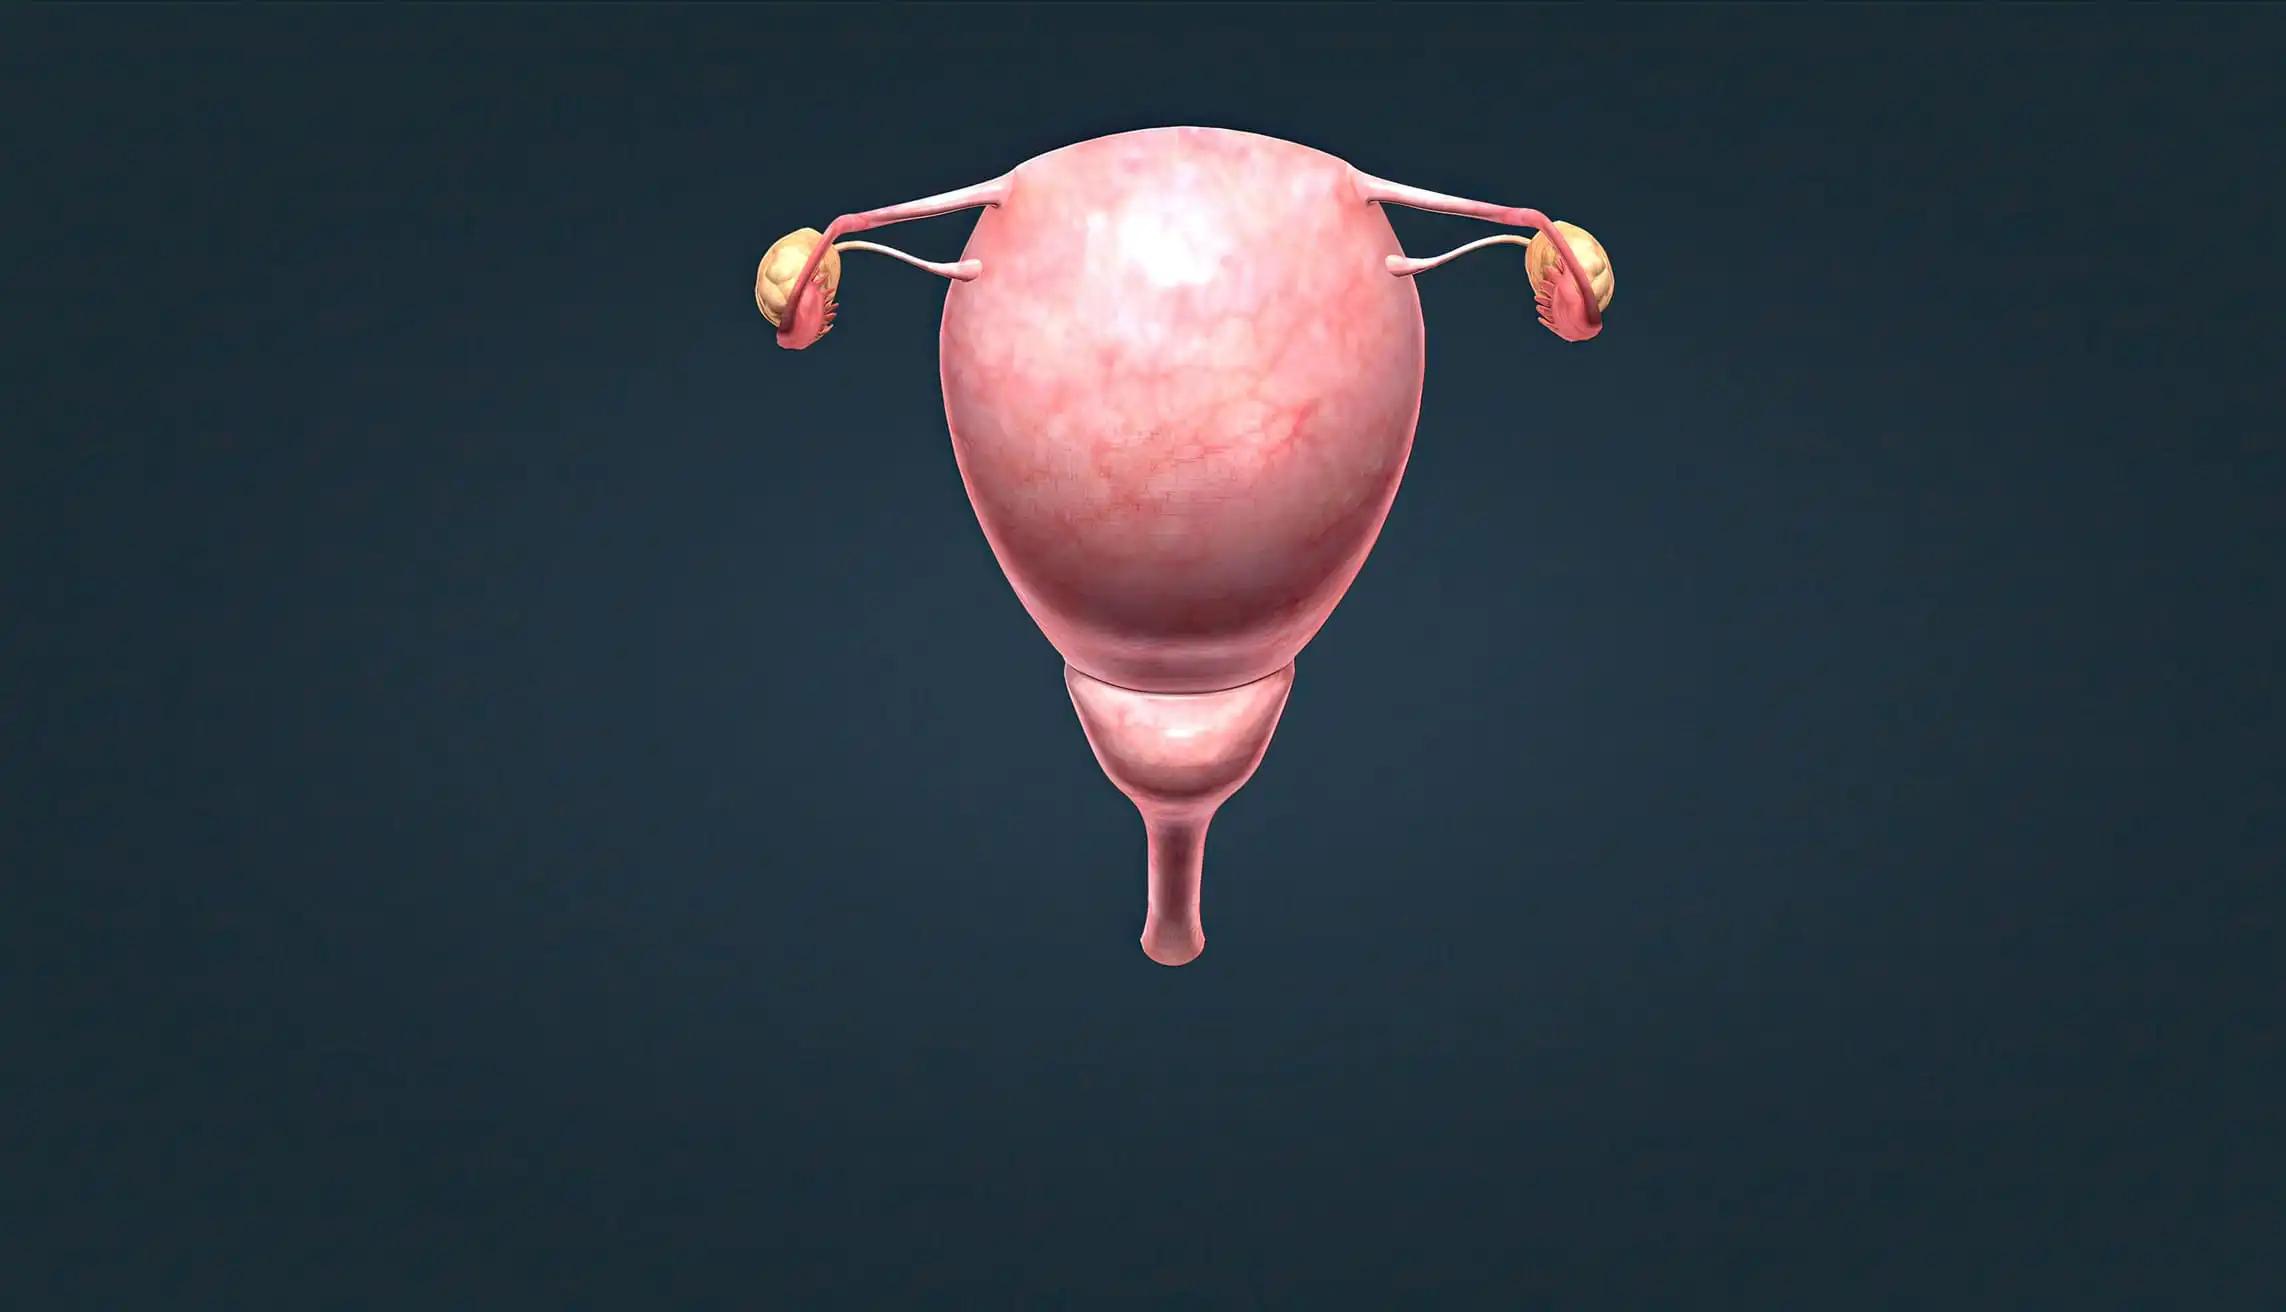 Female's Internal Reproductive Organs